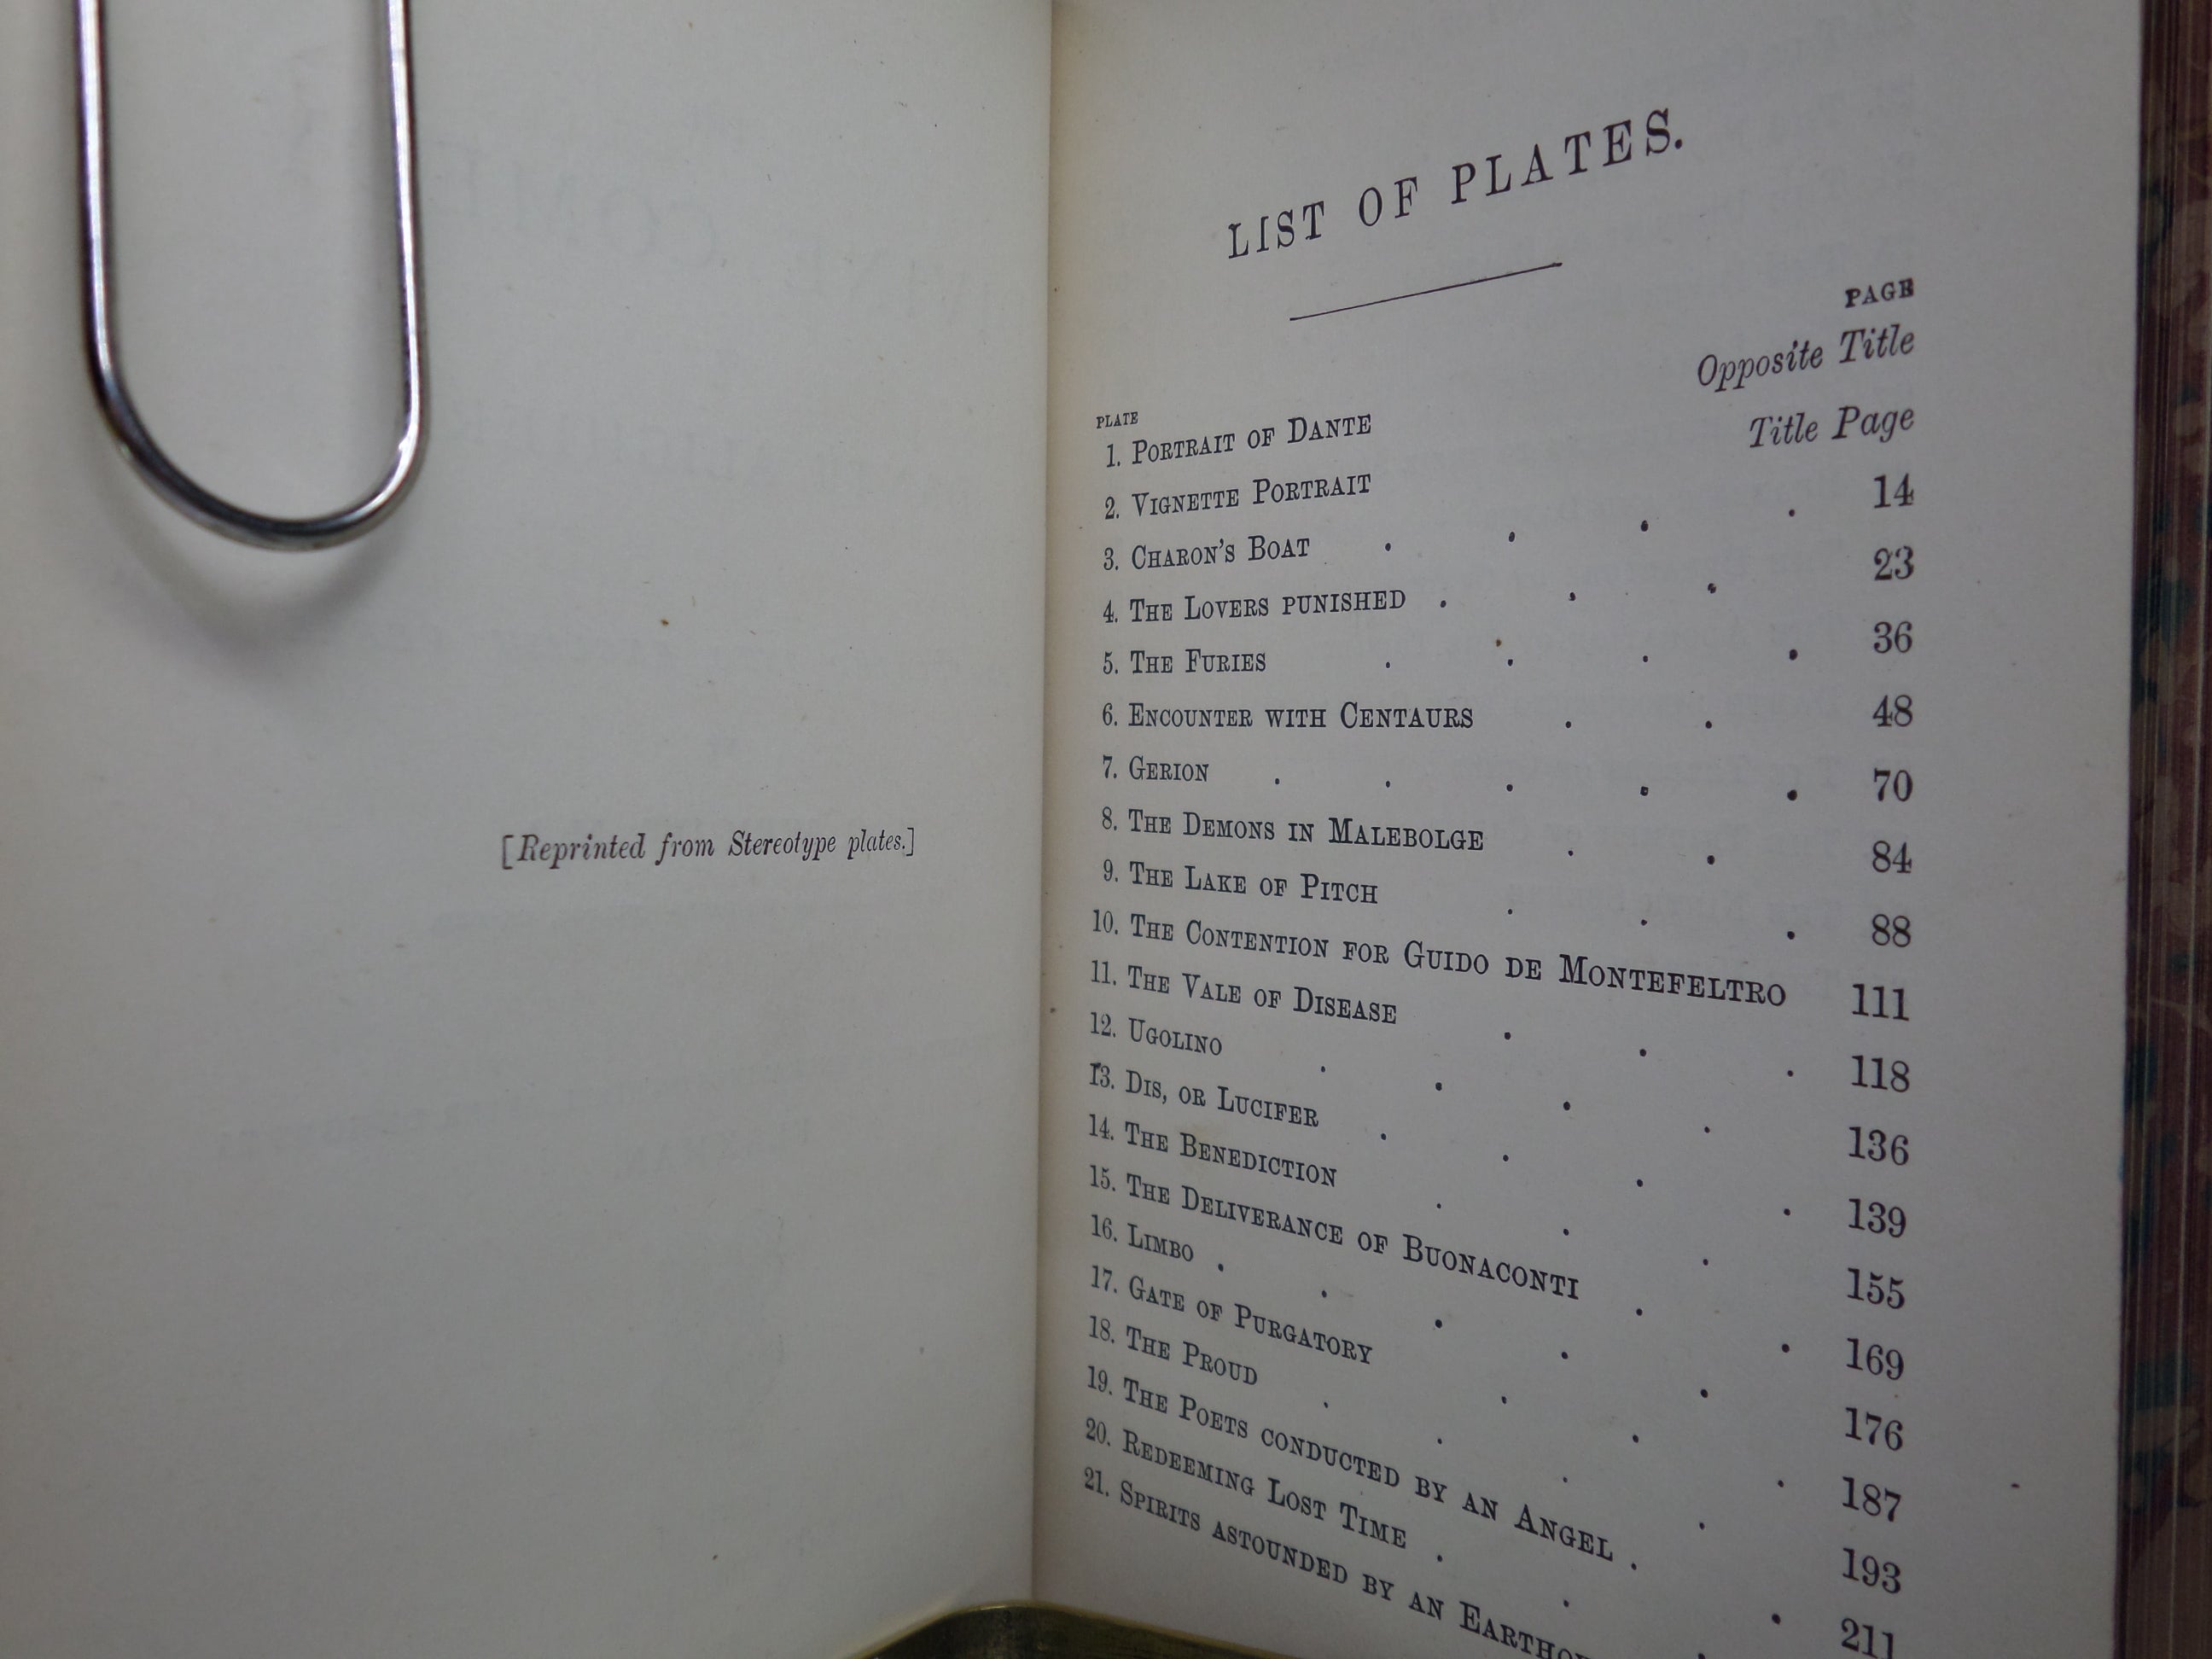 THE DIVINE COMEDY OF DANTE ALIGHIERI 1900 FLAXMAN ILLUSTRATIONS, FINE BINDING